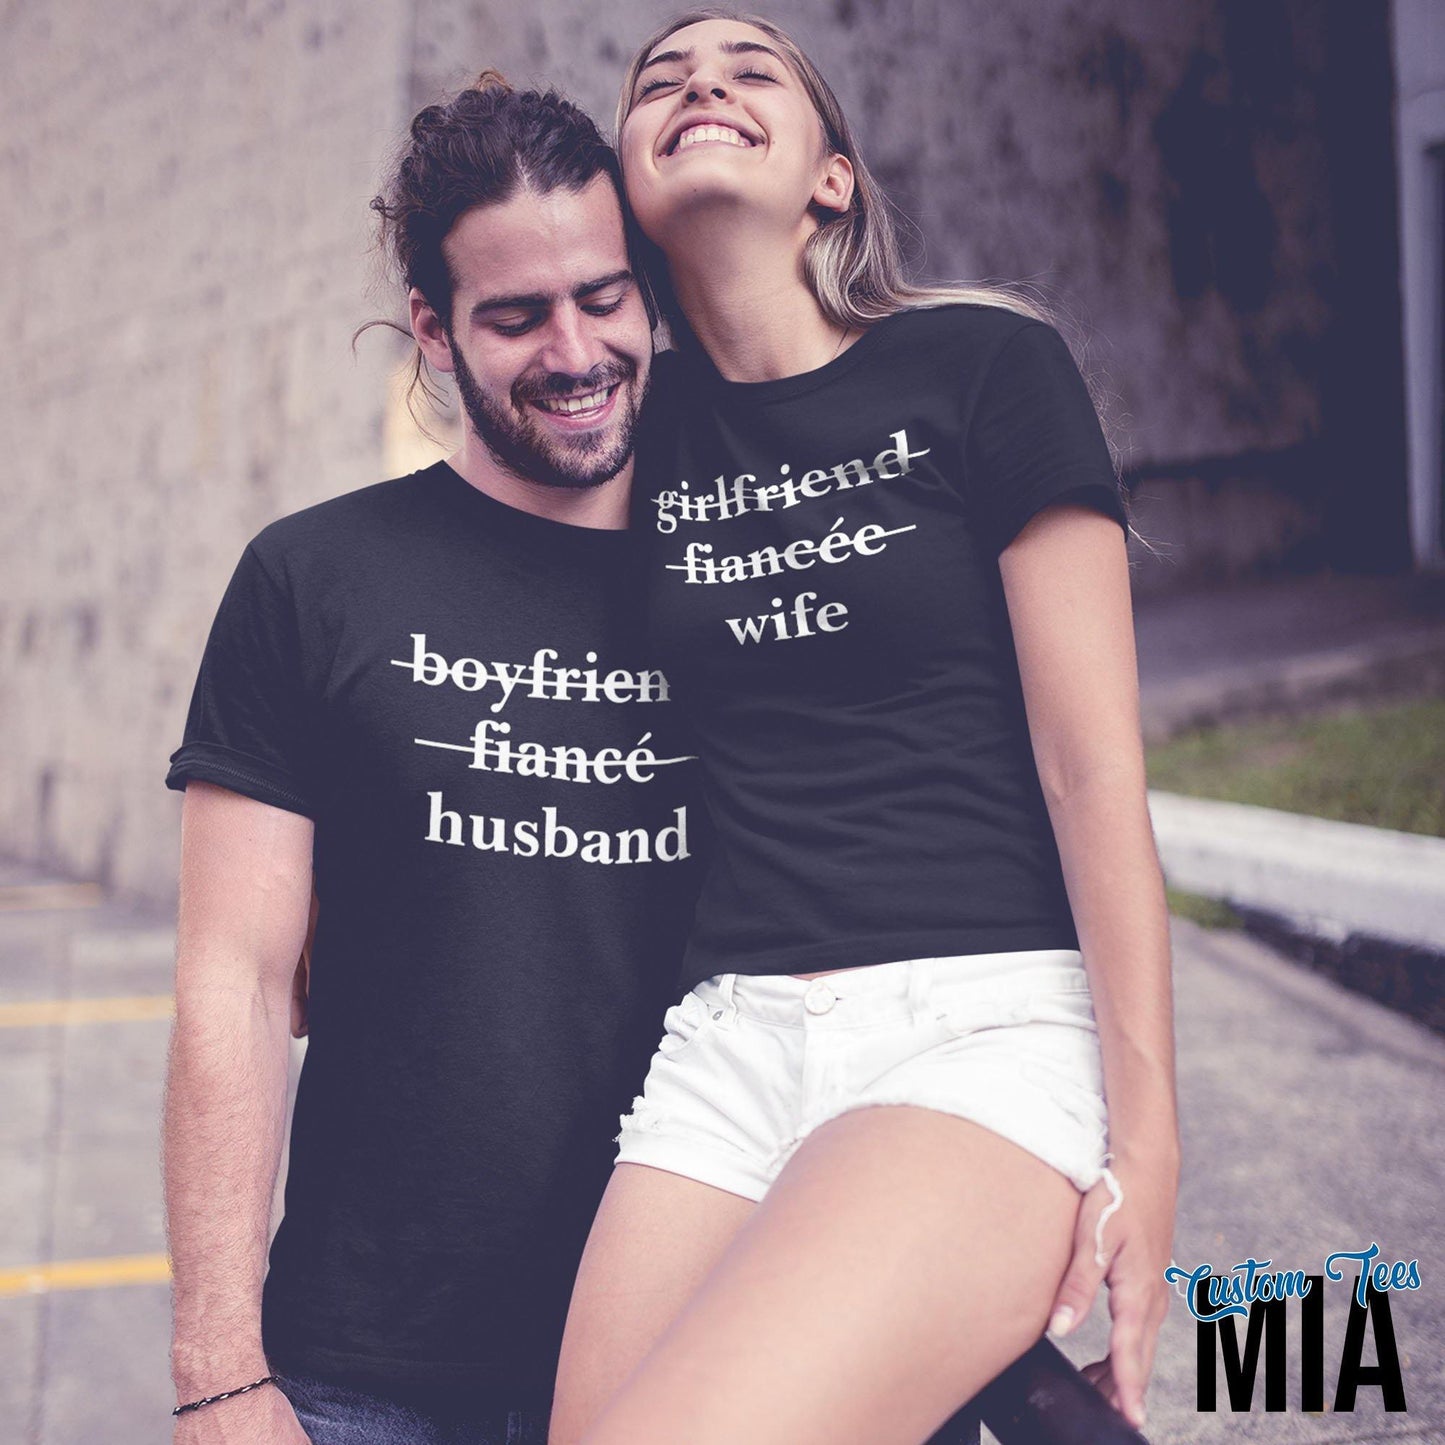 New Husband and Wife Matching Shirts - Custom Tees MIA